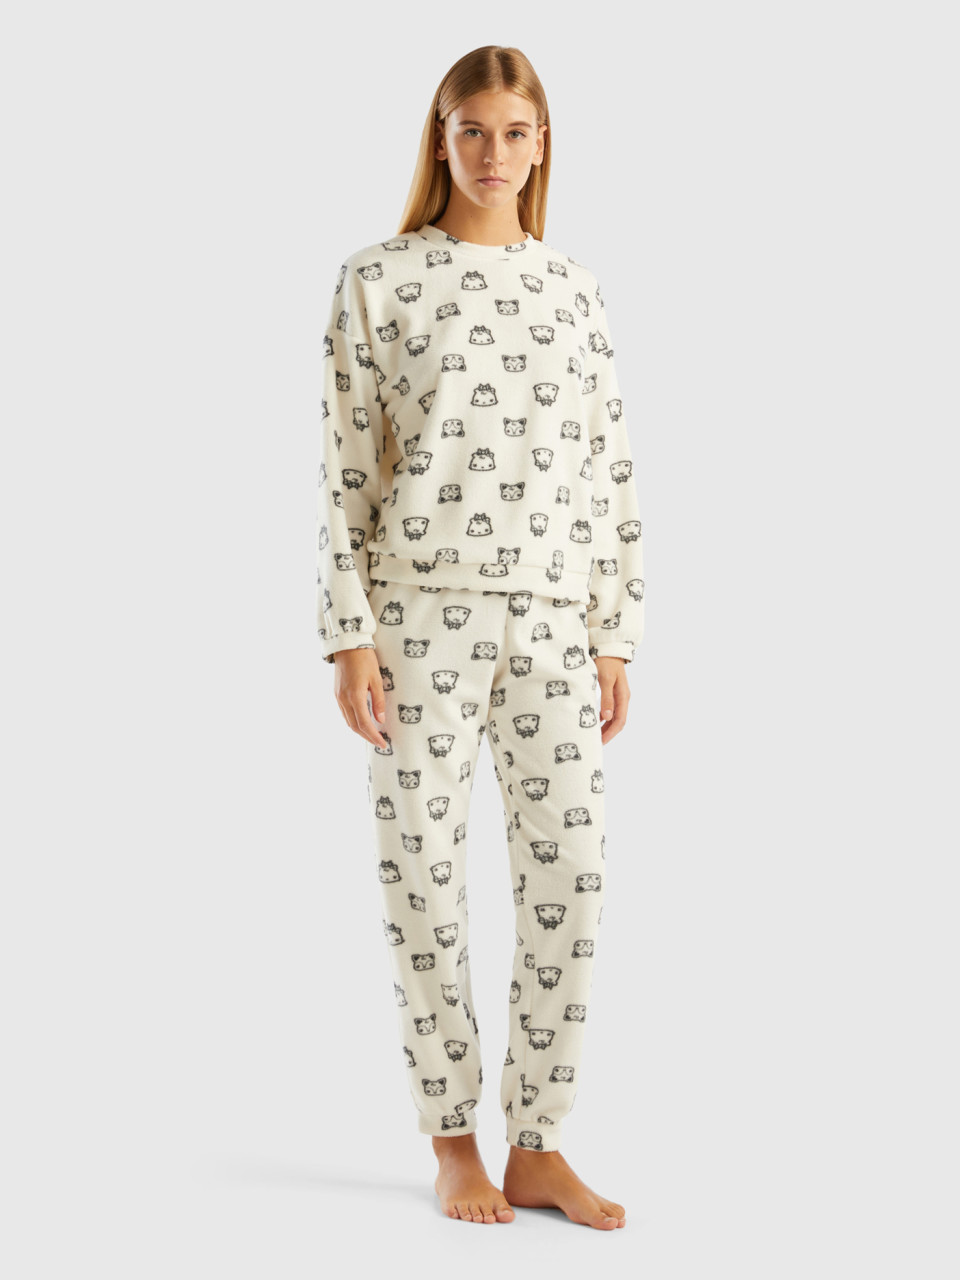 Benetton, Fleece Pyjamas With Mascot Print, Creamy White, Women